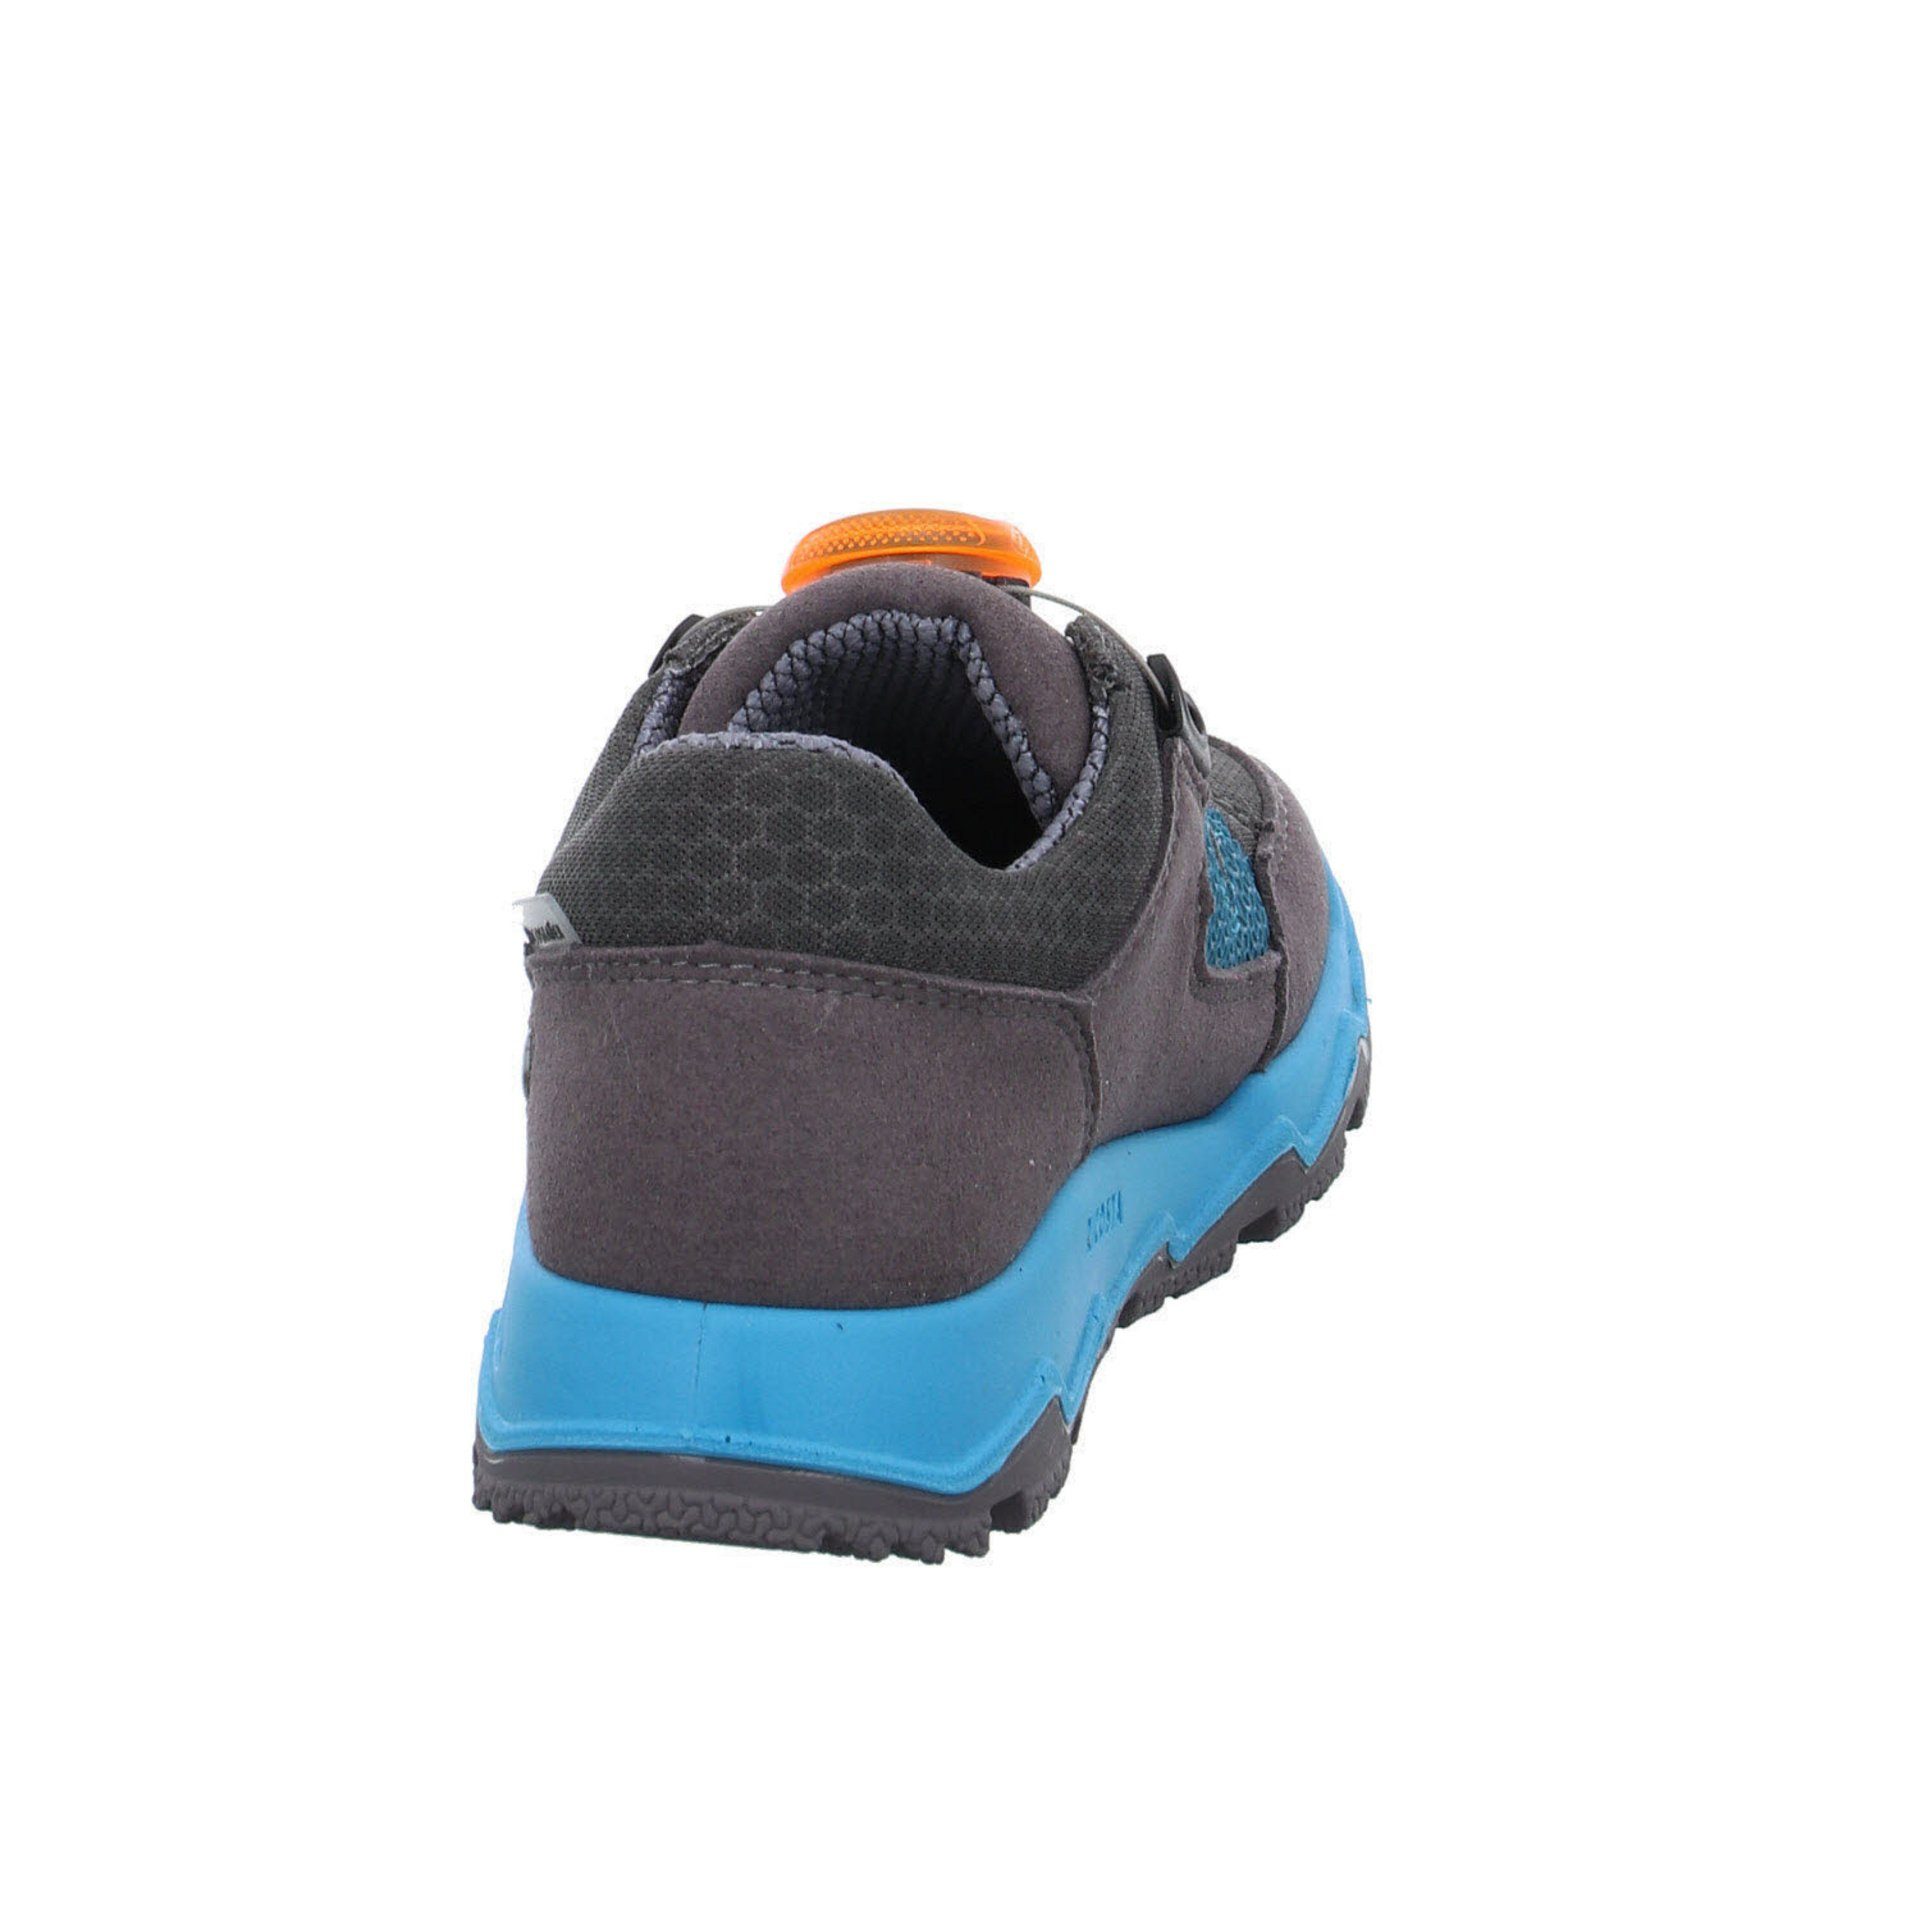 Jungen Schnürhalbschuhe Leder-/Textilkombination Ricosta Sneaker graphit/grau Canyon Halbschuh